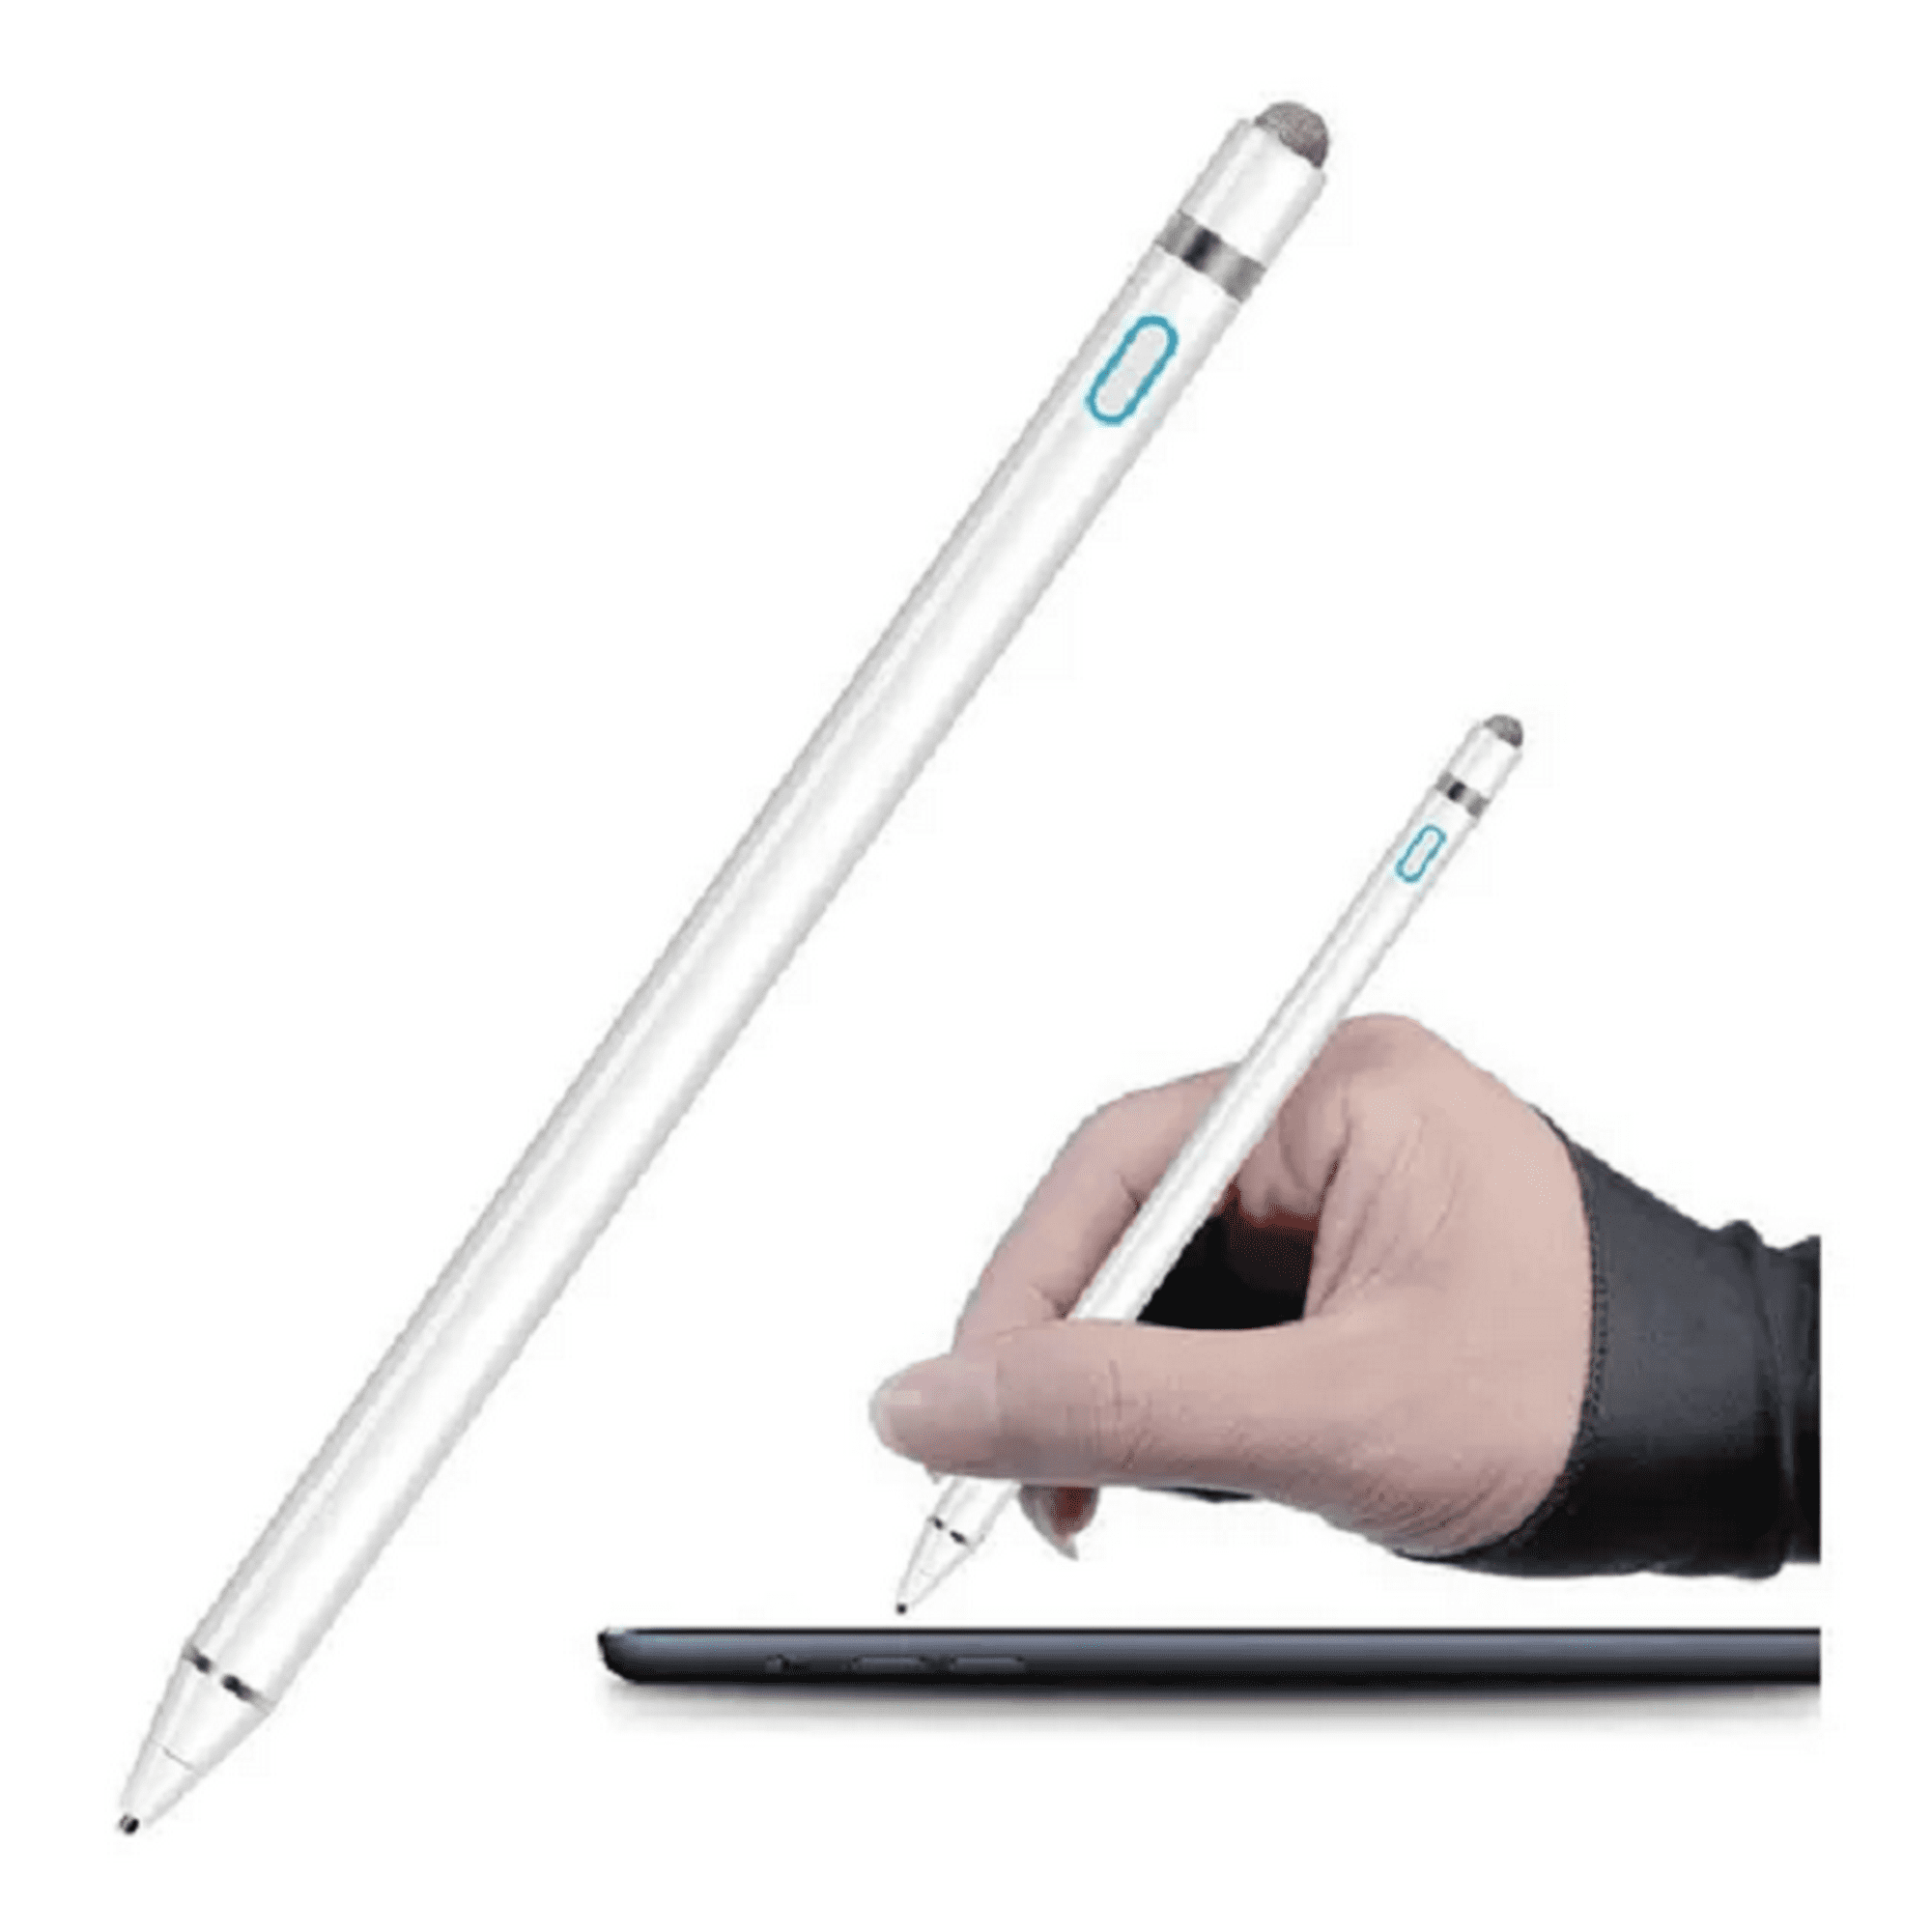 Lápiz Tablet LEZUN, Lápiz Táctil Universal para iPad, iPhone, iOS/Android  Móvil y Otras Tabletas, Lápiz para Tablet para Escribir/Dibujar con